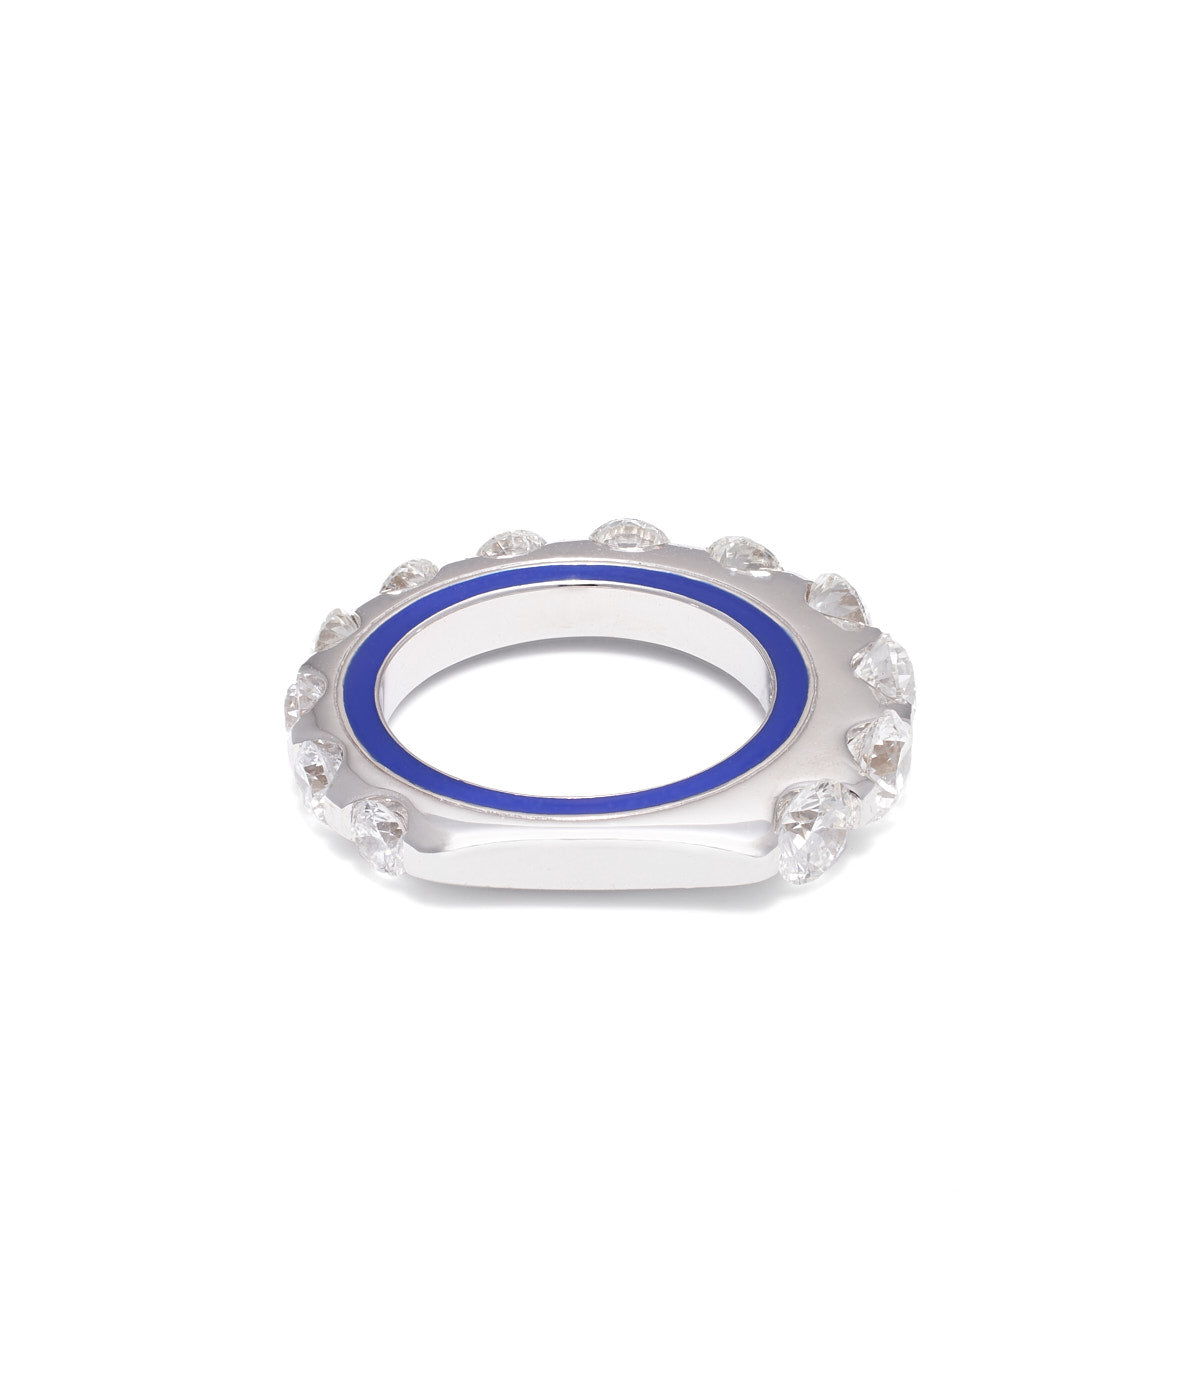 The Brilliant Round Enamel 18K White Gold Pinky Ring